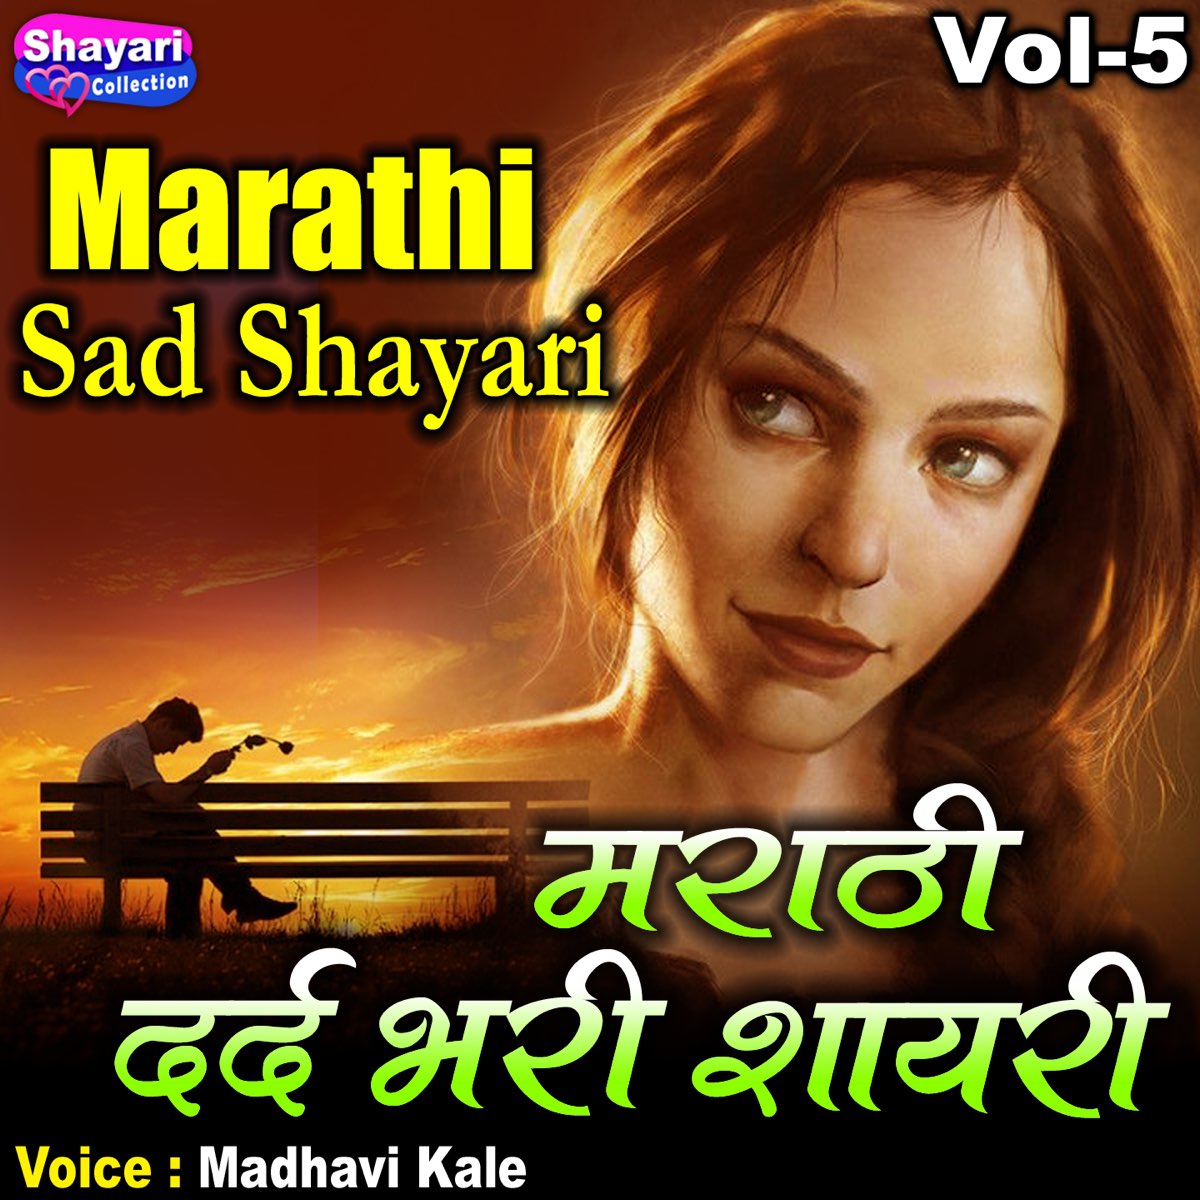 Marathi Sad Shayari, Vol. 5 - Single by Madhavi Kale on Apple Music